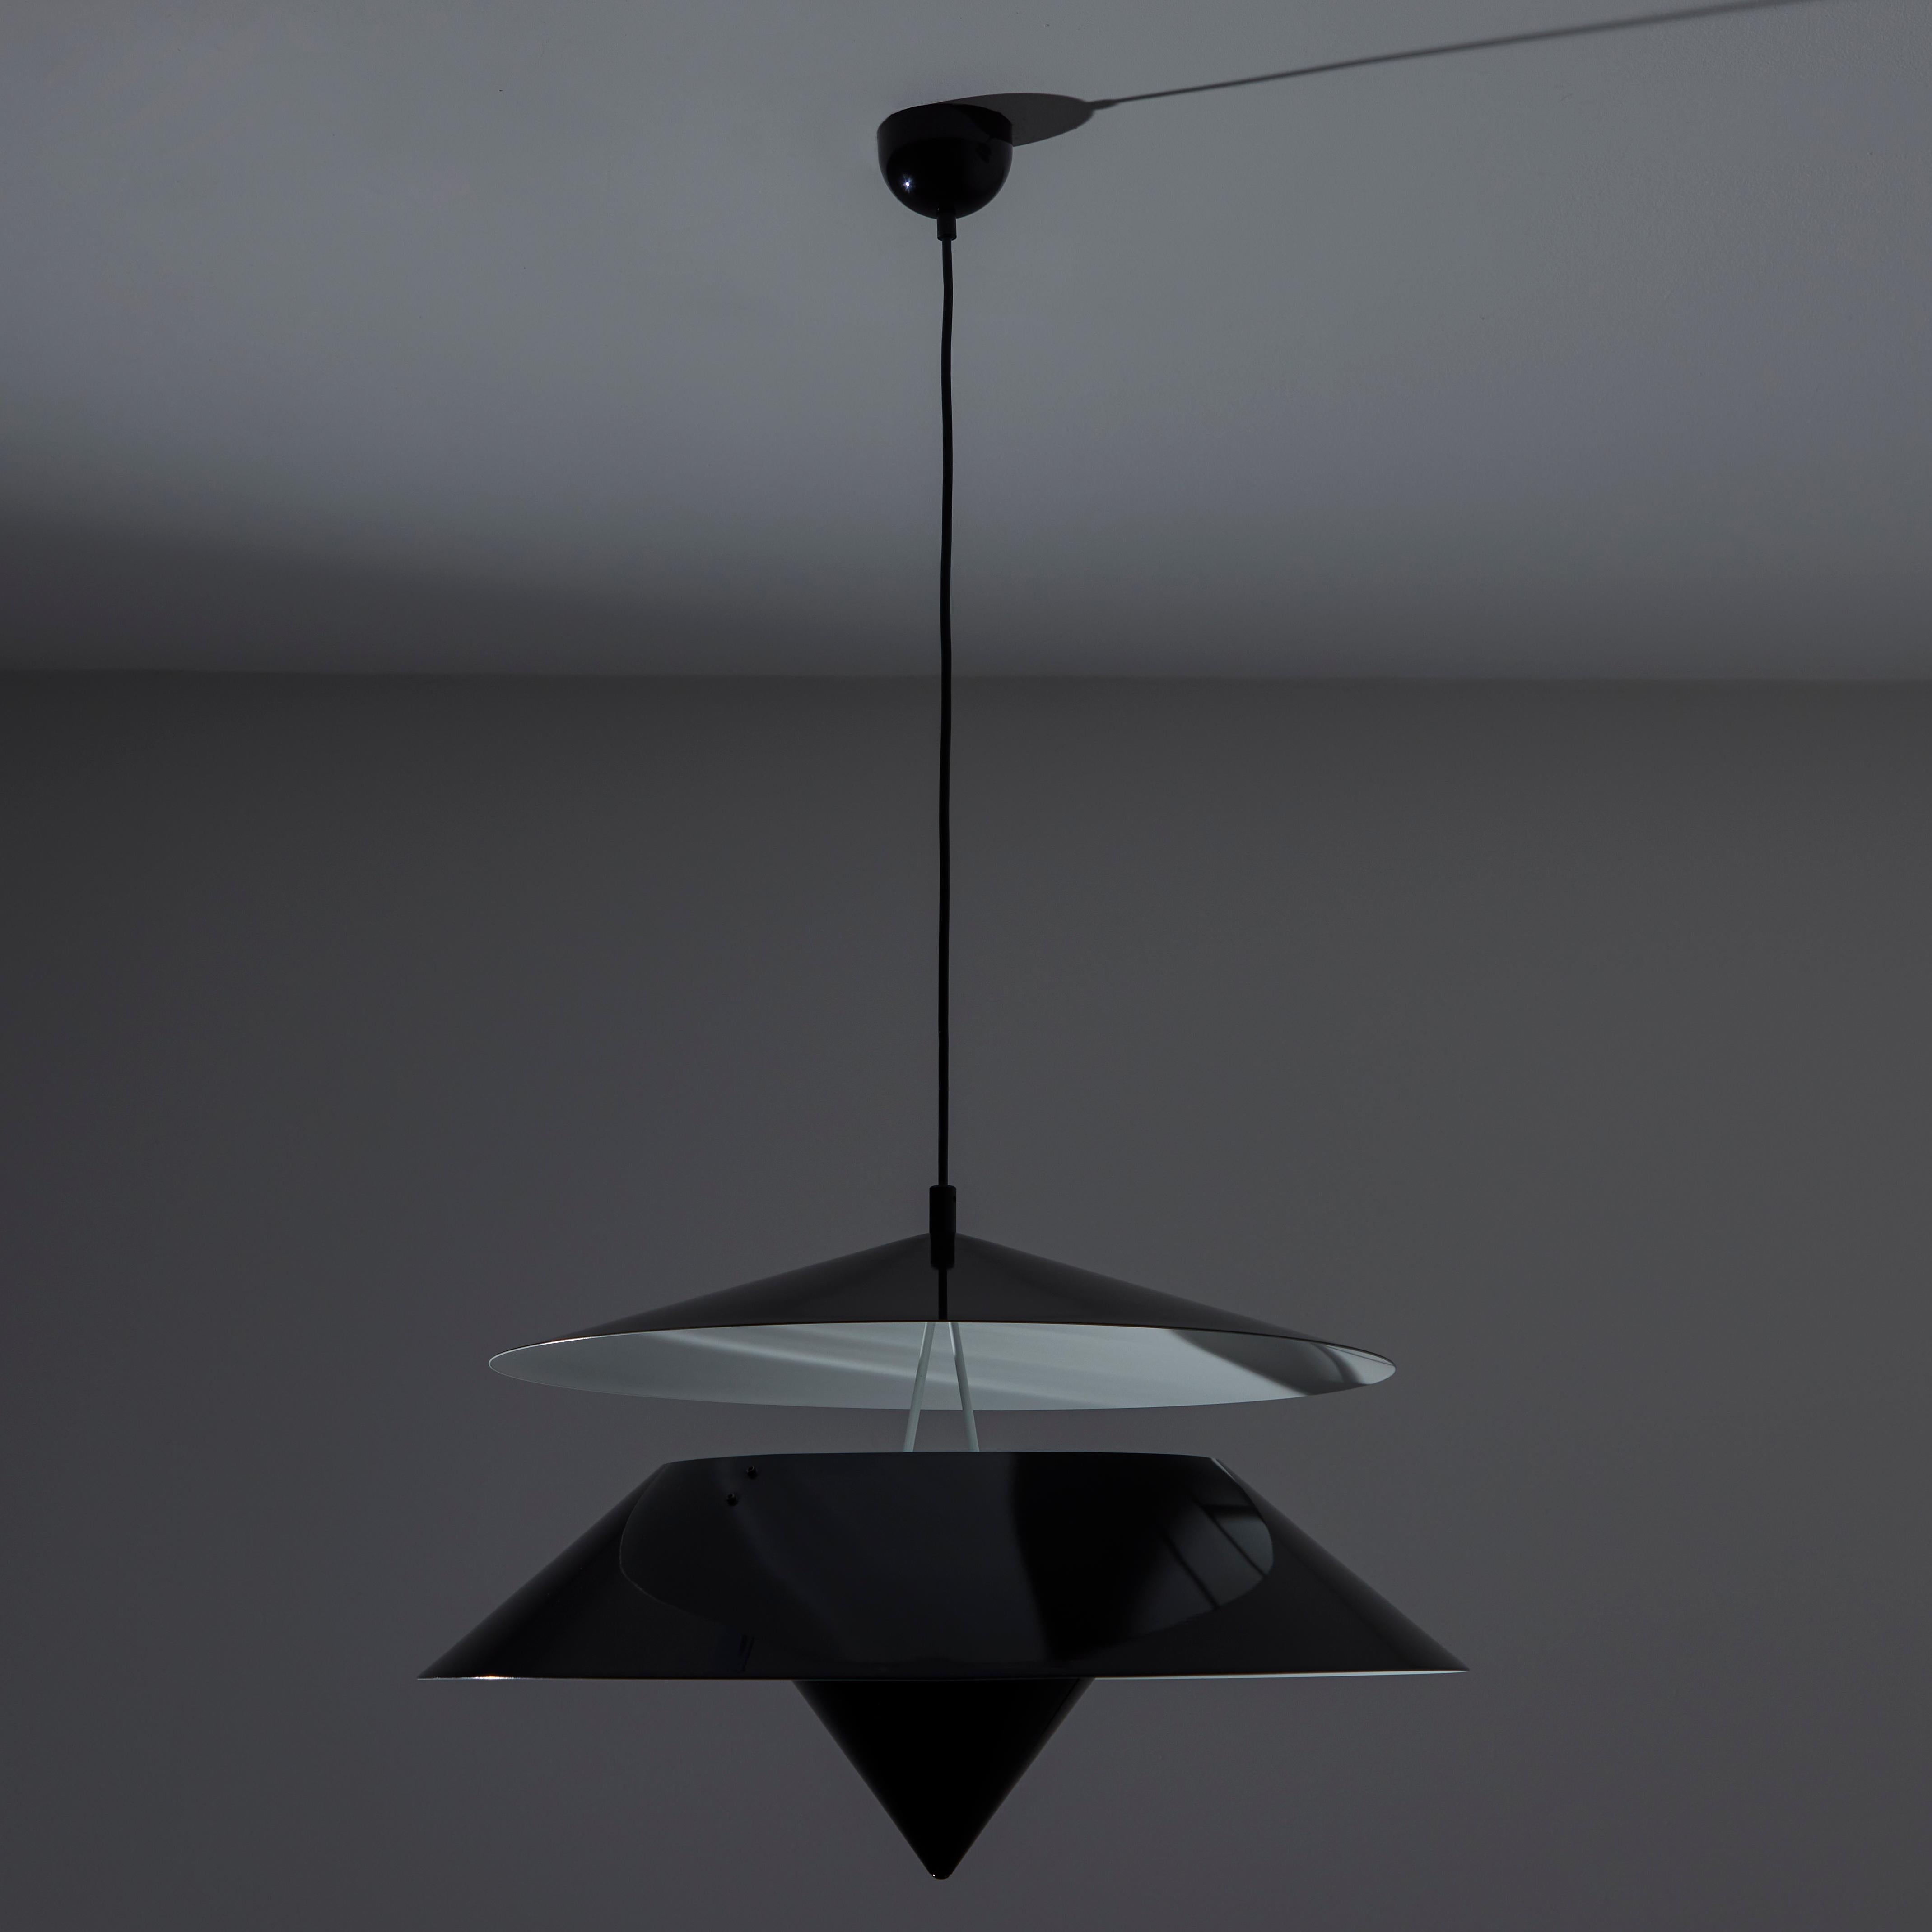 'Akaari' Ceiling Light by Vico Magistretti for Oluce 1